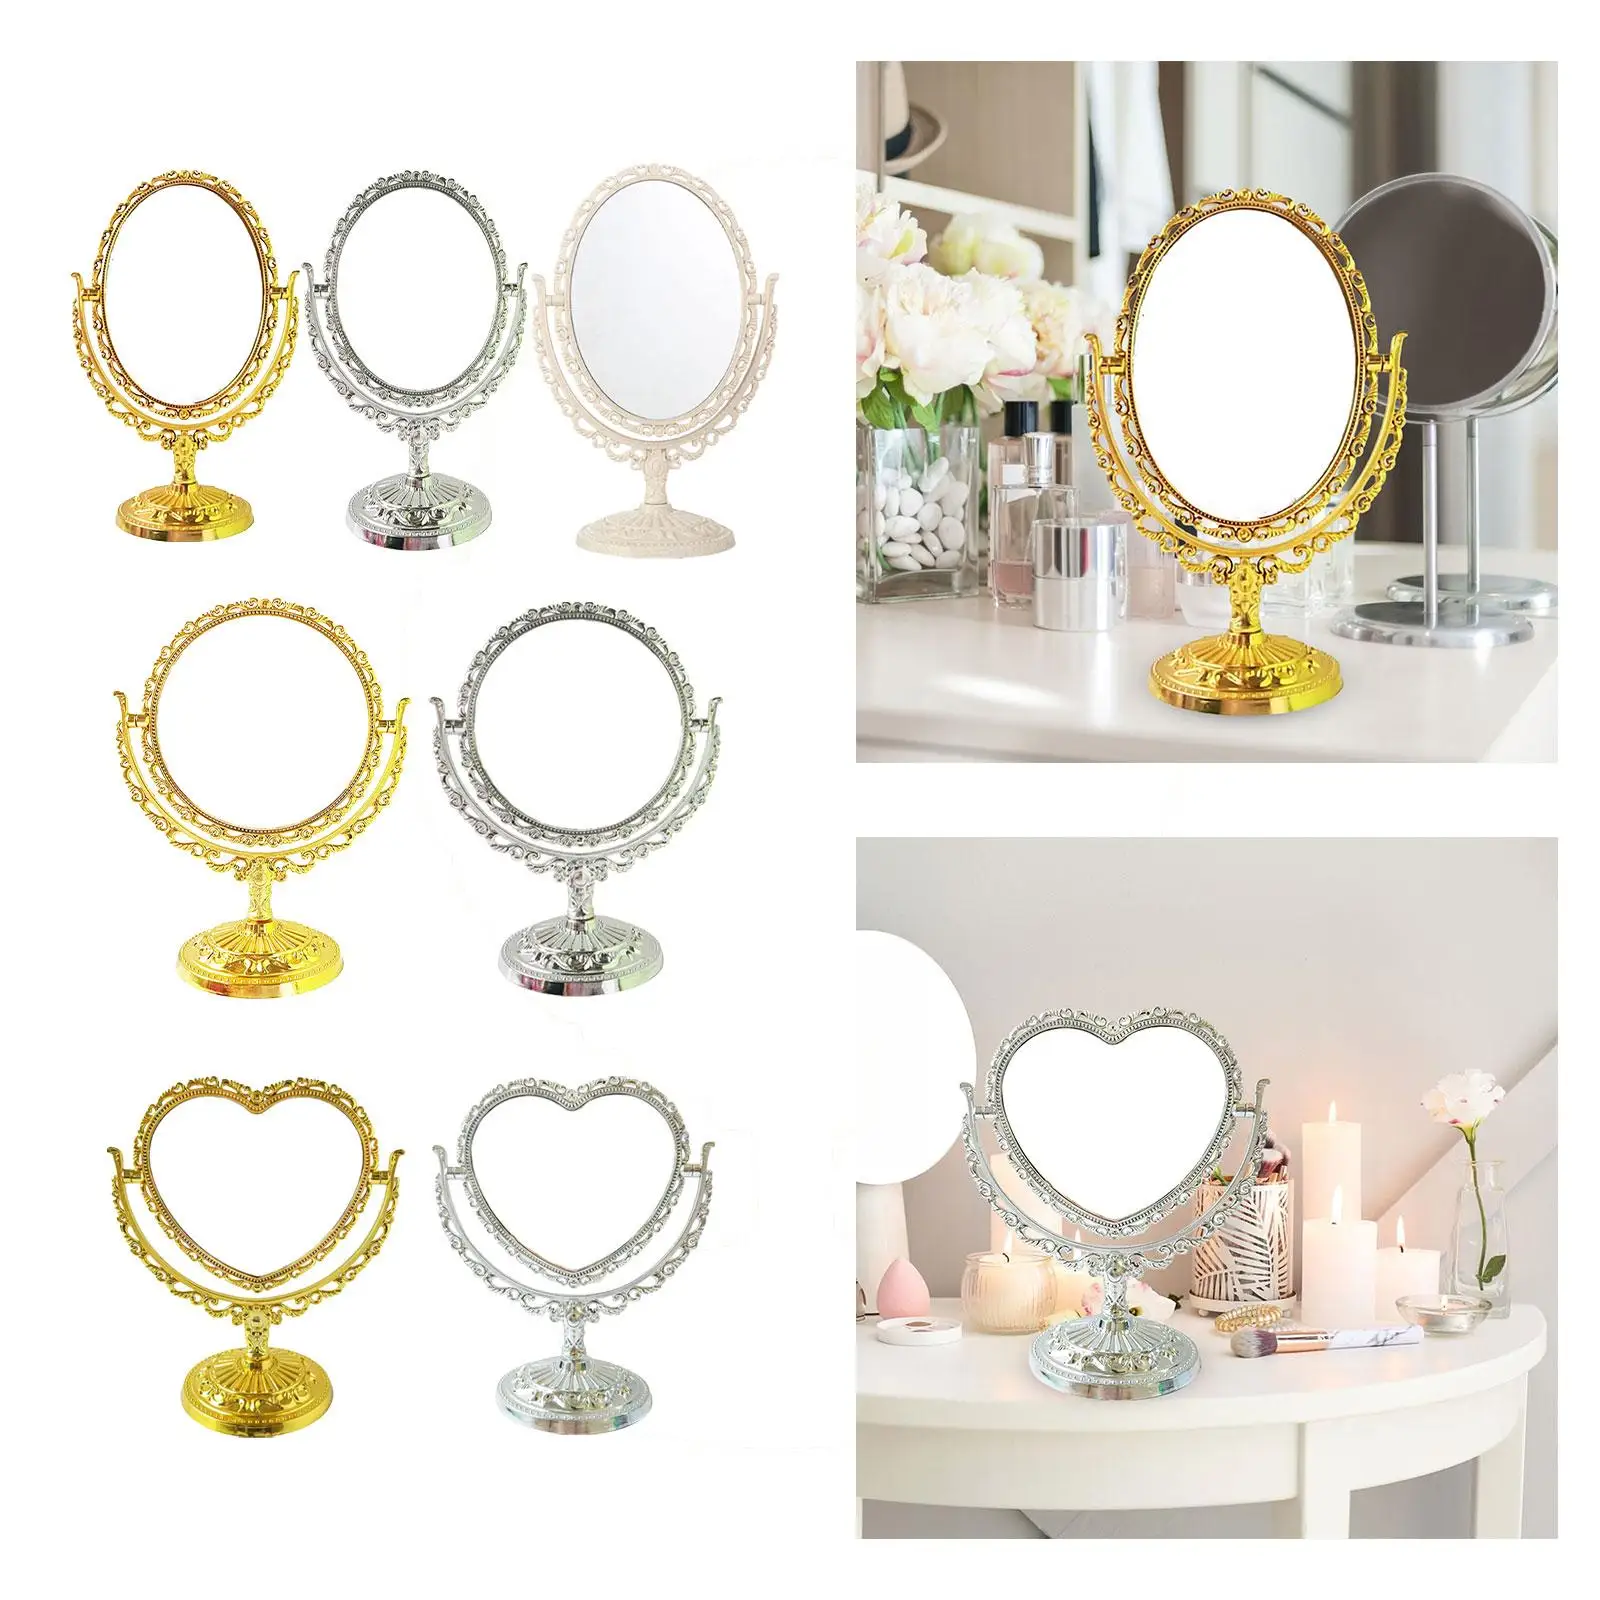 Tabletop Makeup Mirror Elegant Decorative 360 Degree Rotation Desktop Stand Mirror for Vanity Bedroom Bath Hotel Dressing Room